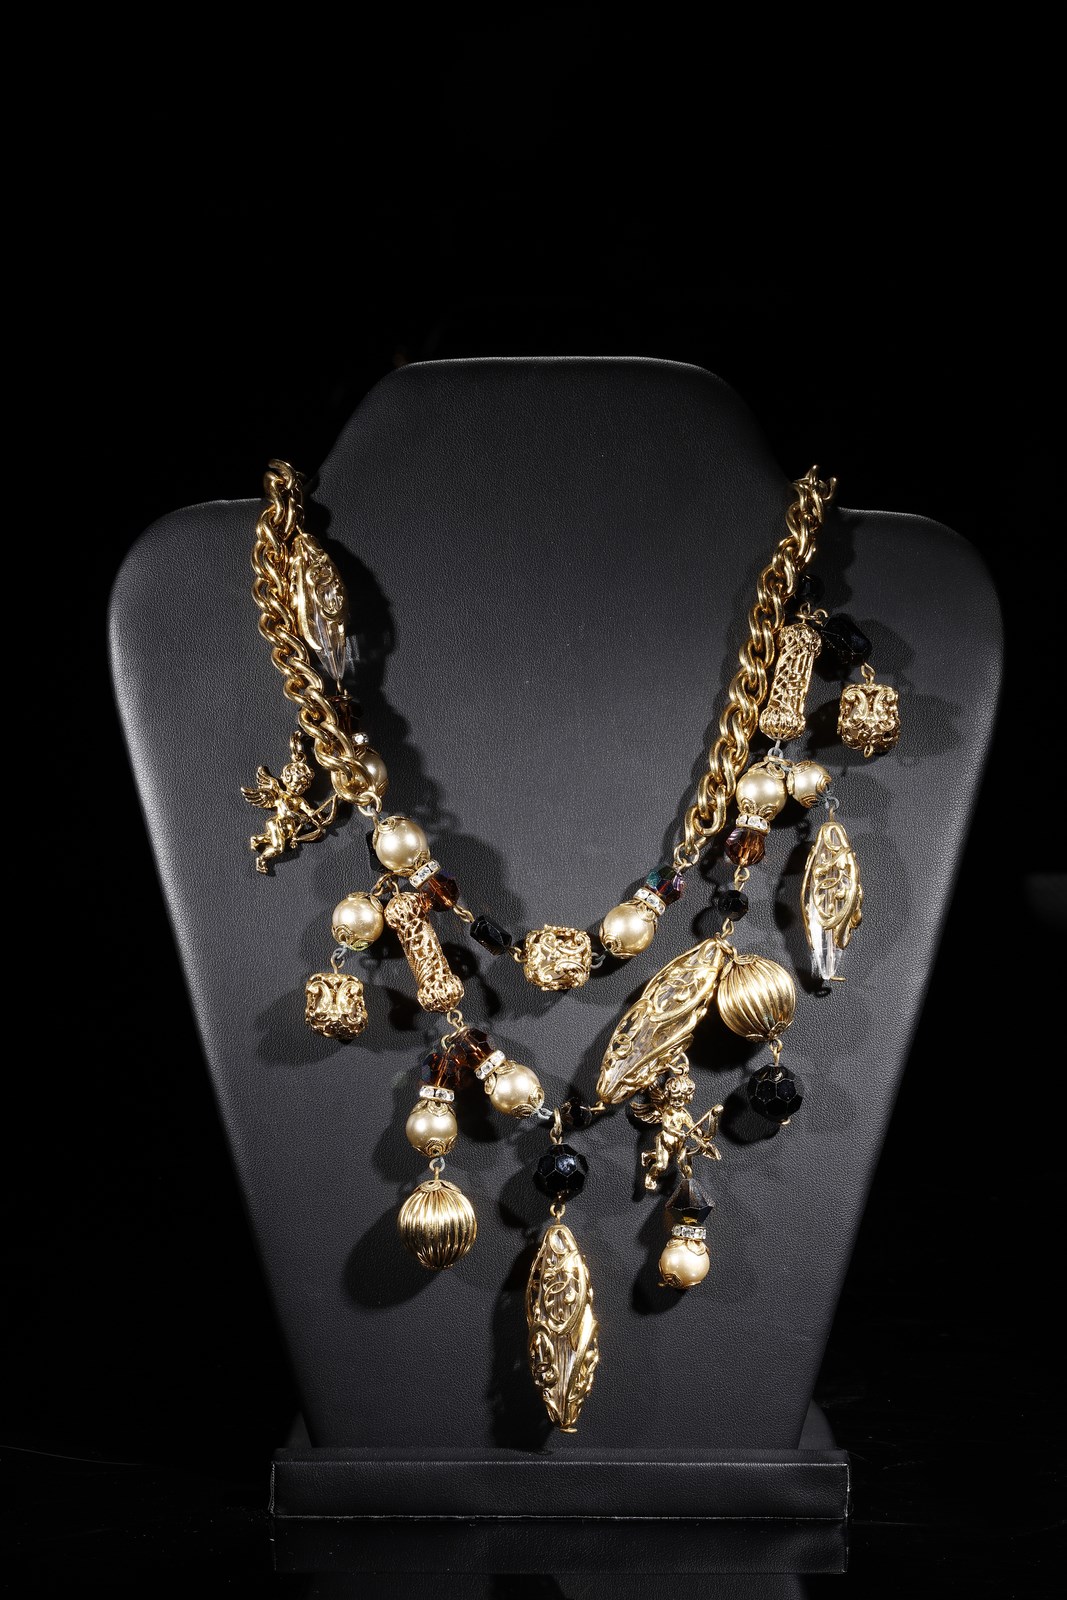 Necklace with cupids. (Francoise Montague)